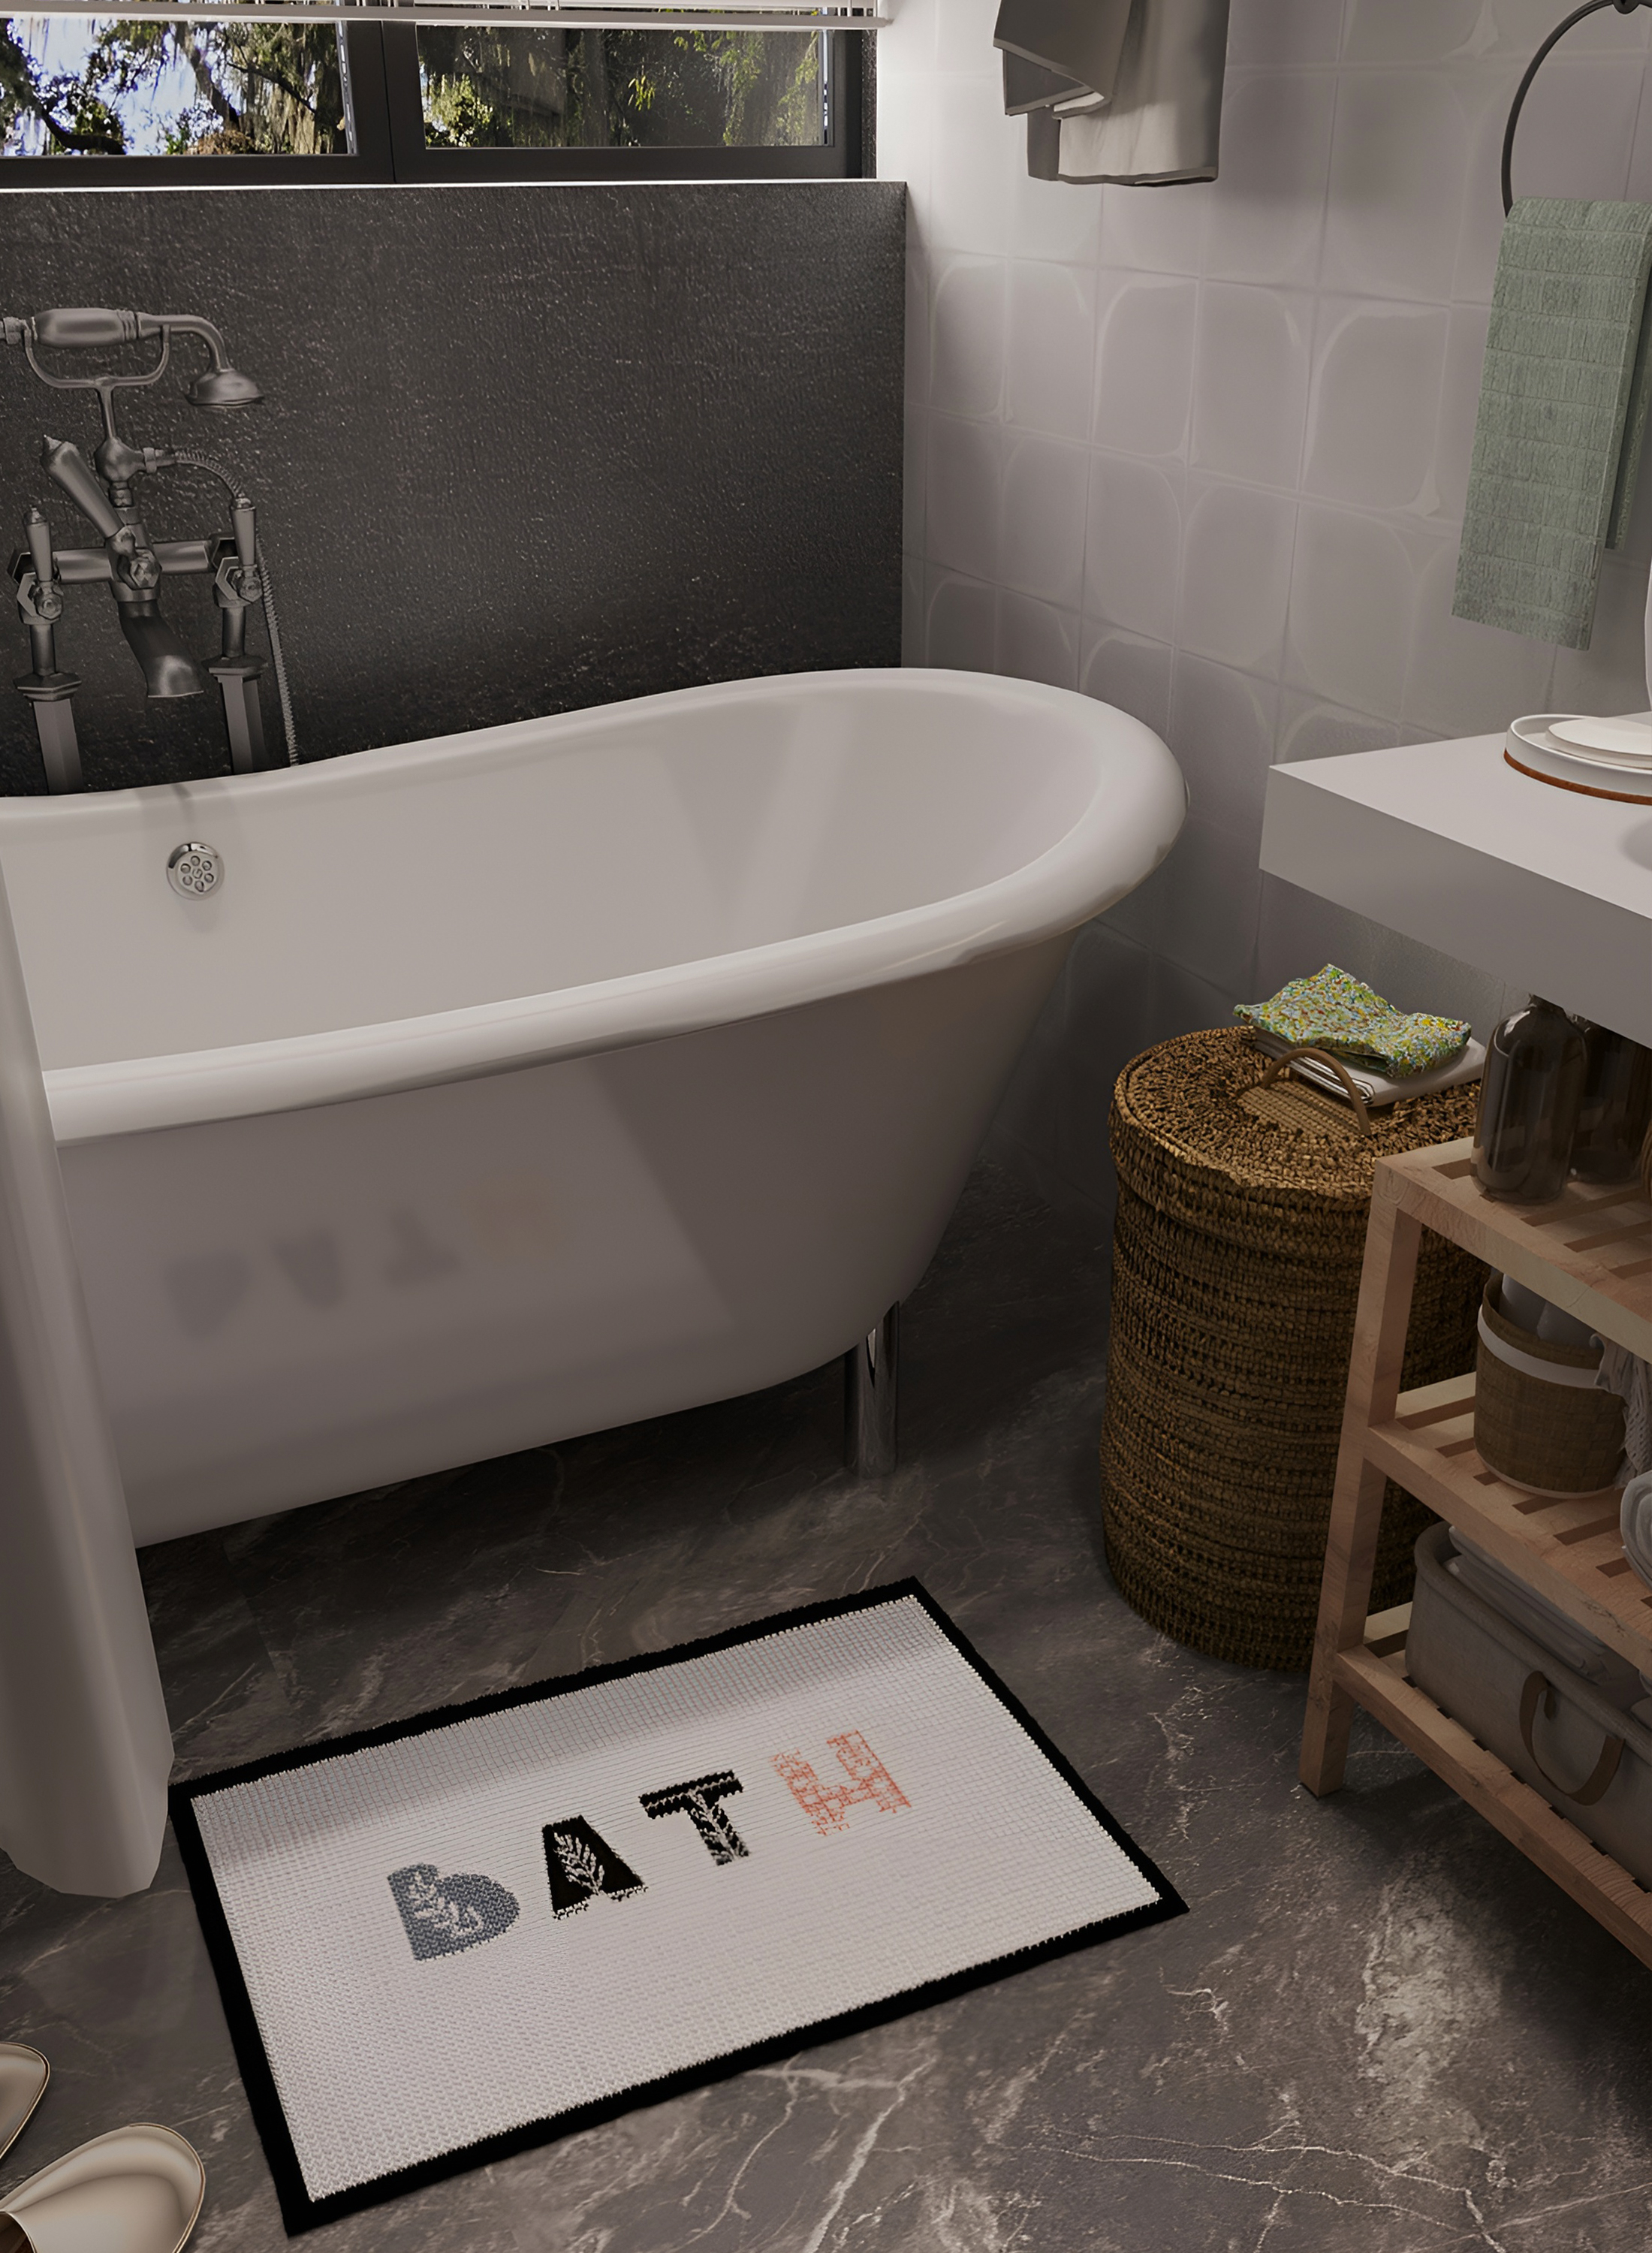 Dijital Kaymaz Yıkanabilir Nordic İskandinav Modern Bathroom Bath Banyo Paspası Banyo Halısı Seti Krem